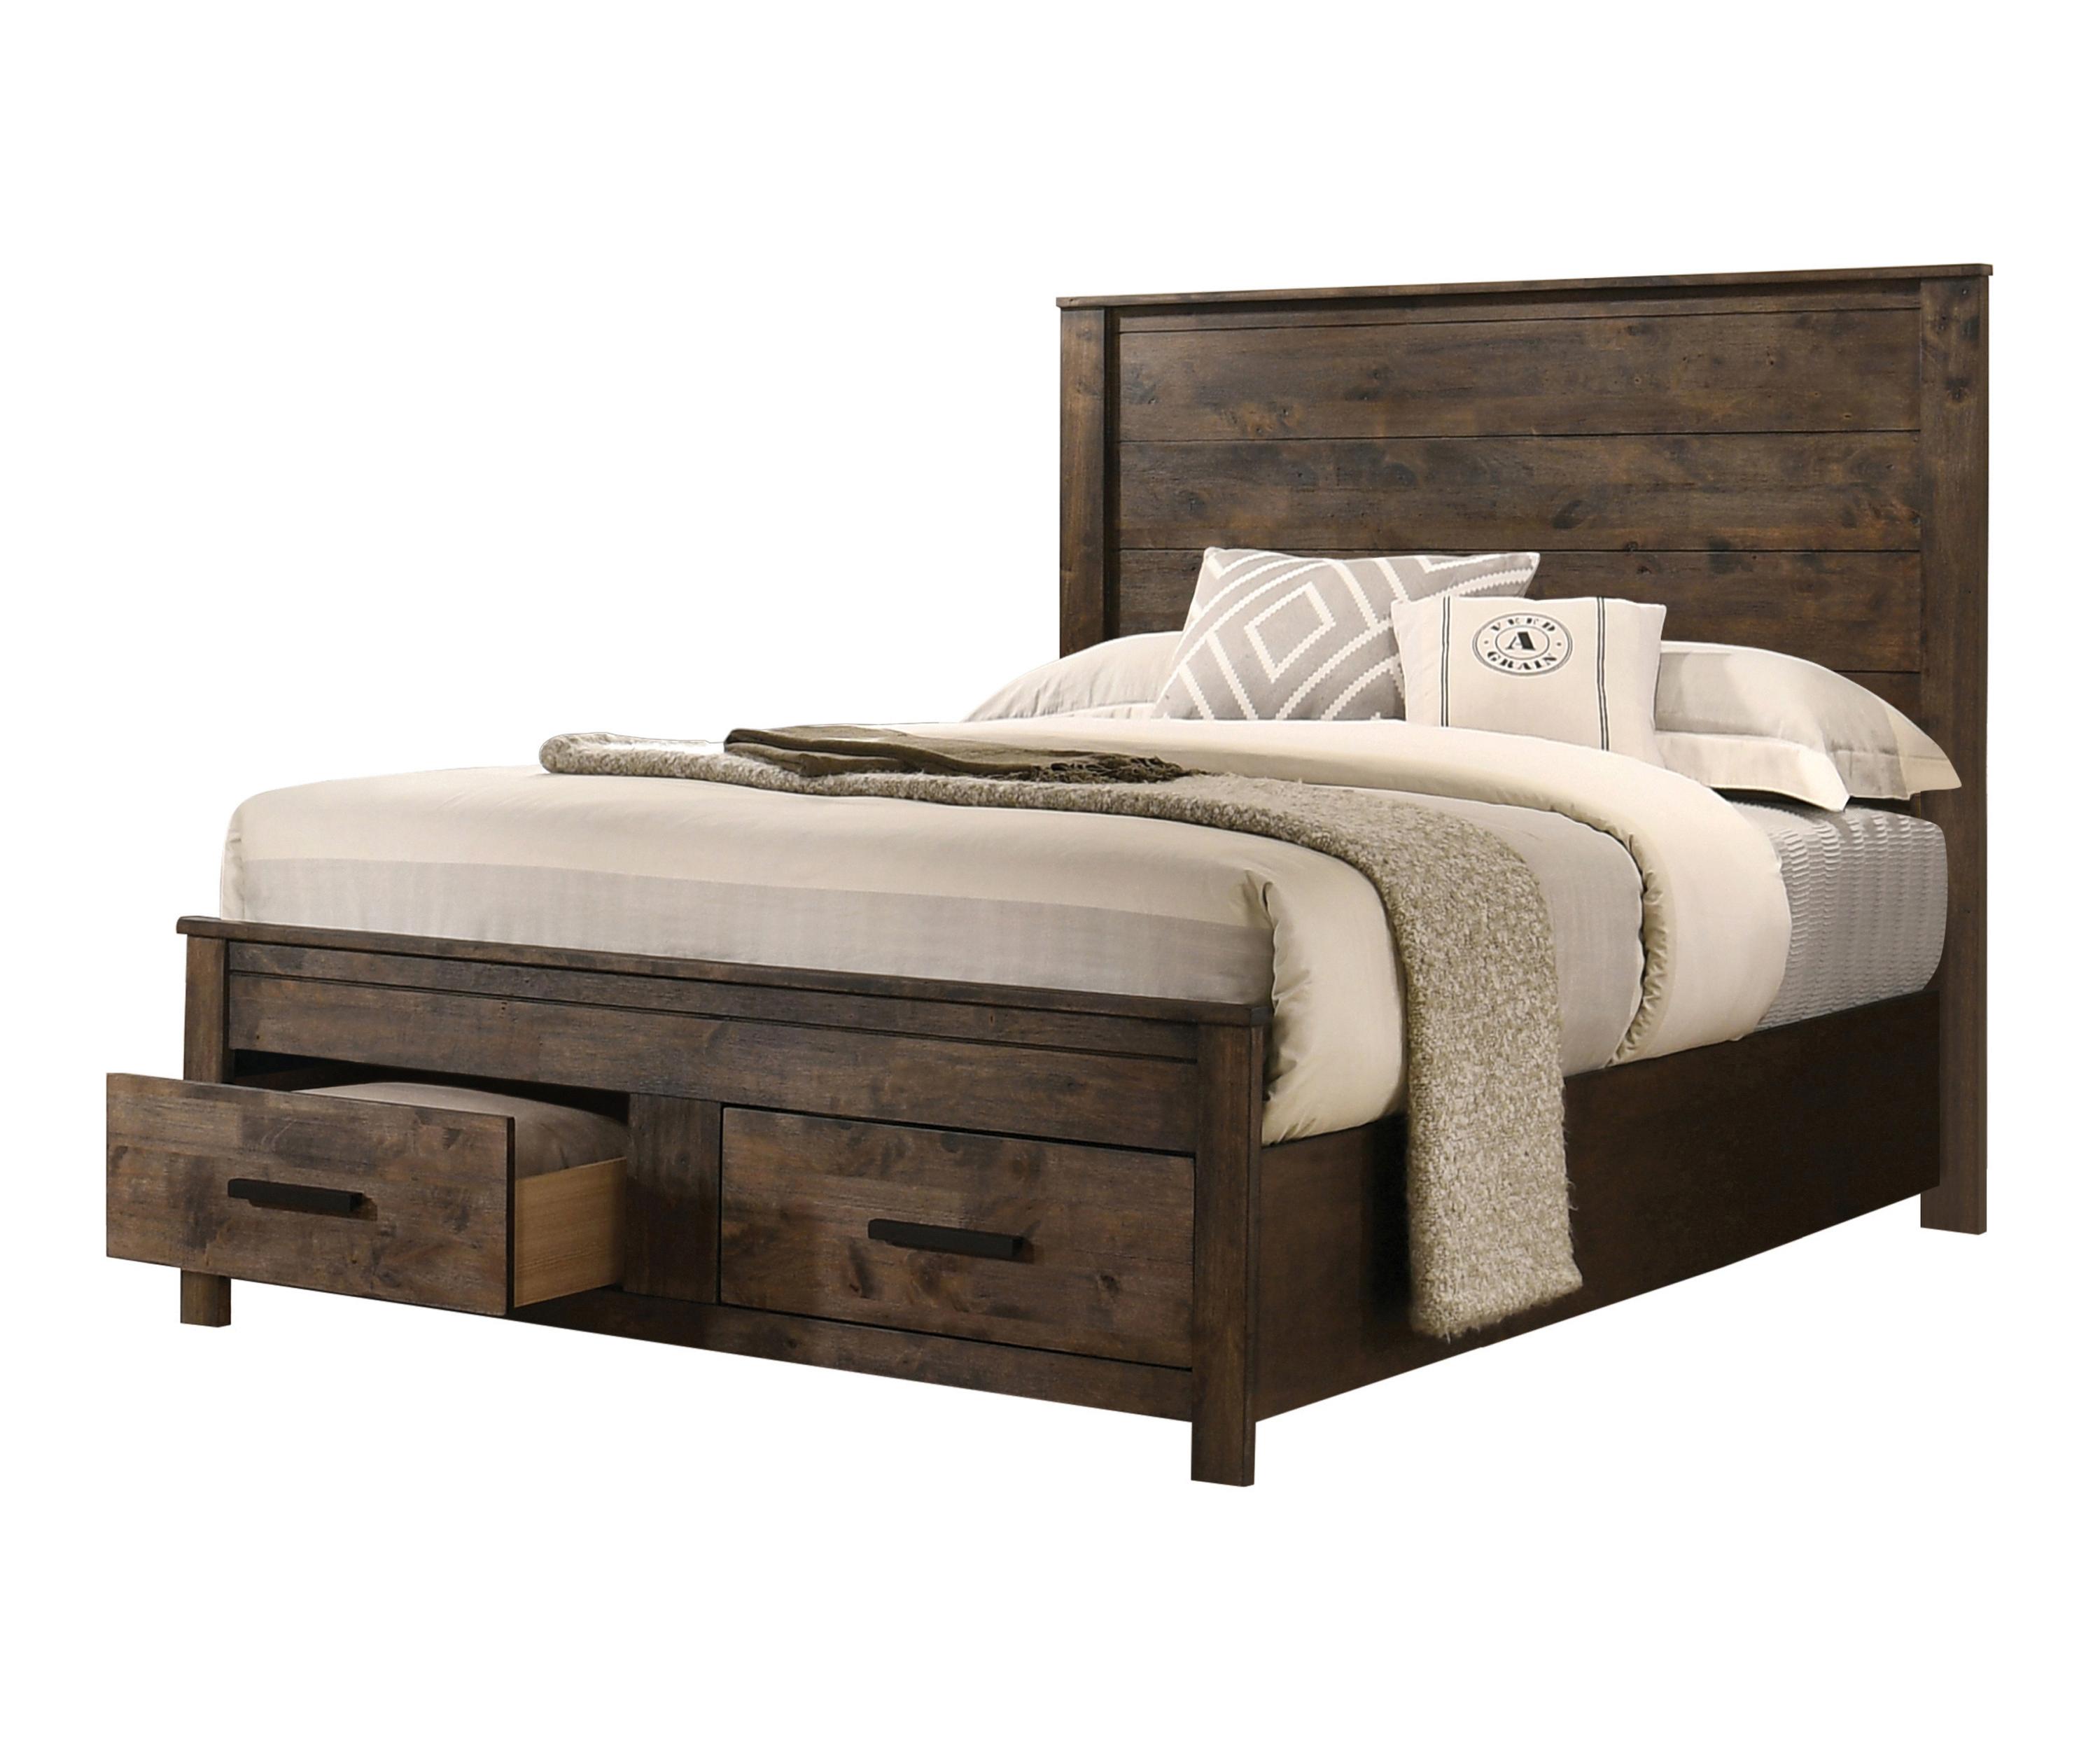 Rustic Bed 222631Q Woodmont 222631Q in Golden Brown 